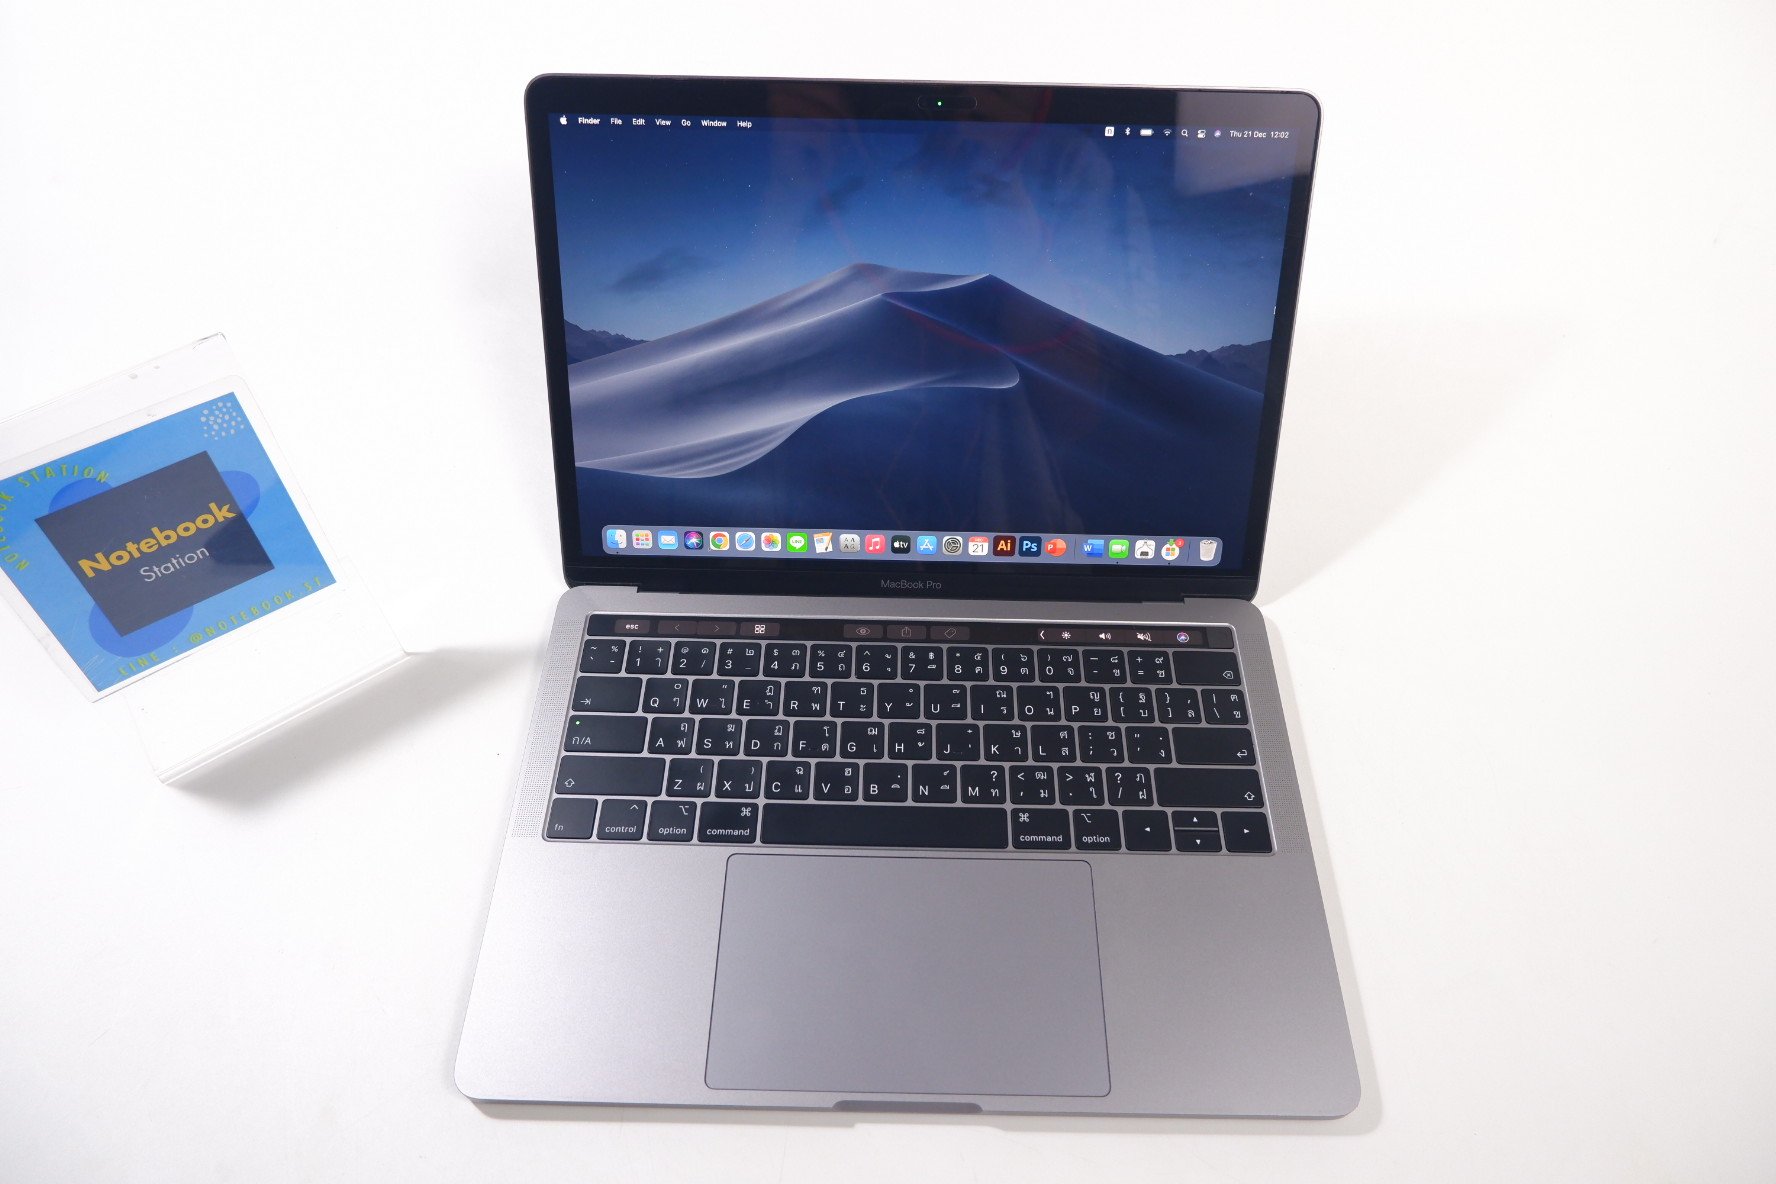 Macbook Pro(2019) i5 Gen 8 Ram8 SSD128 จอ13.3 IPS True Tone คีย์บอร์ดไฟ ฟังก์ชั่นTouch Bar เครื่องสวย พร้อมใช้งาน เพียง 18,900.-